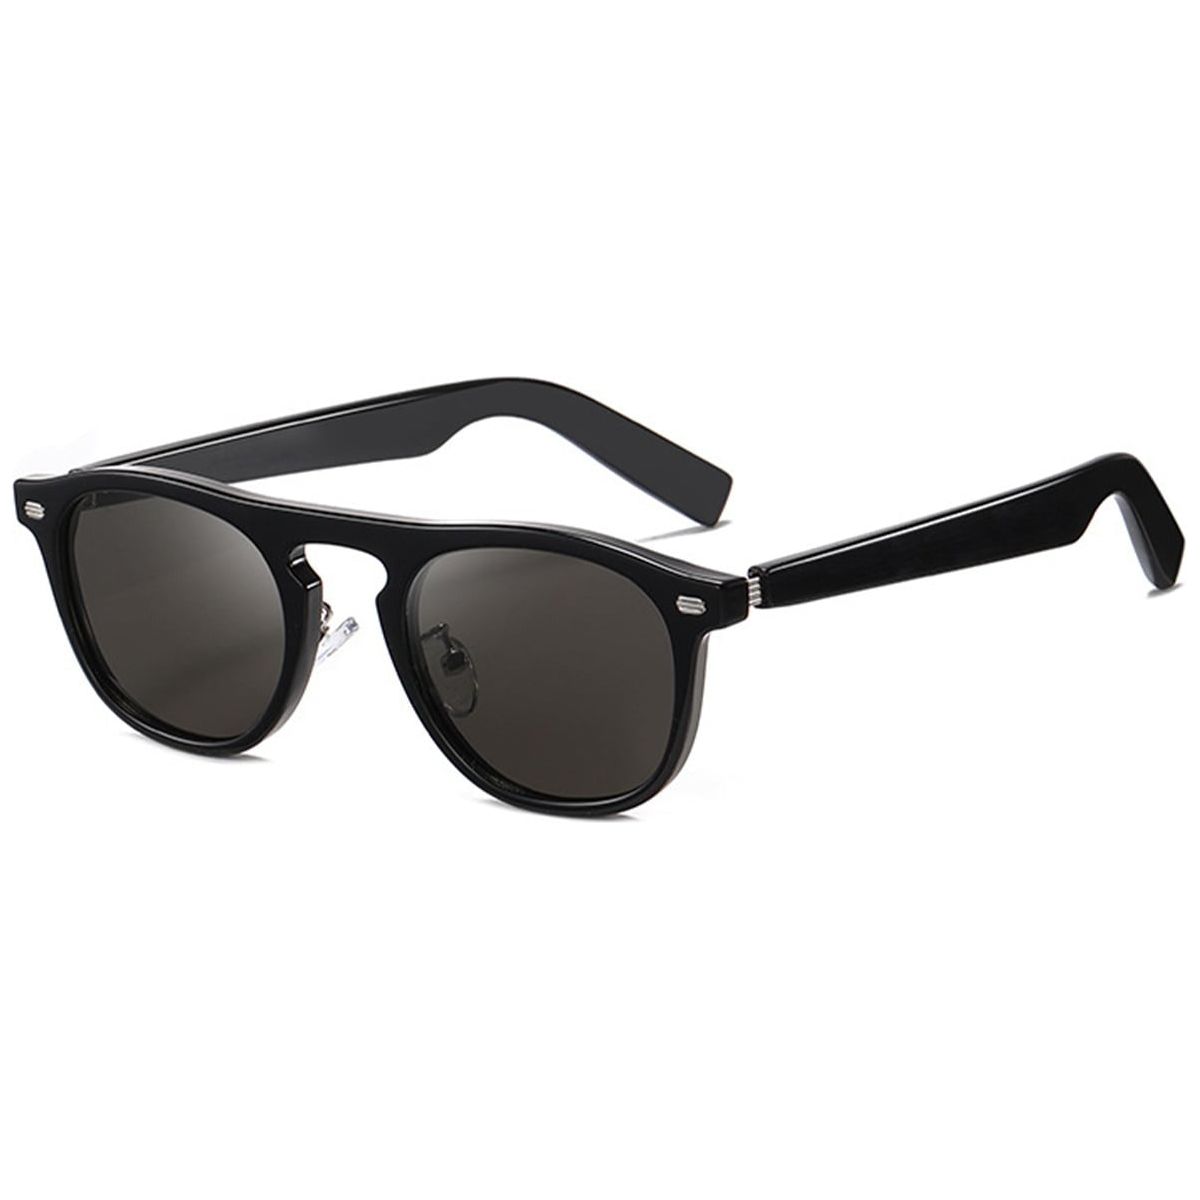 Candye Square Sunglasses SG5023 